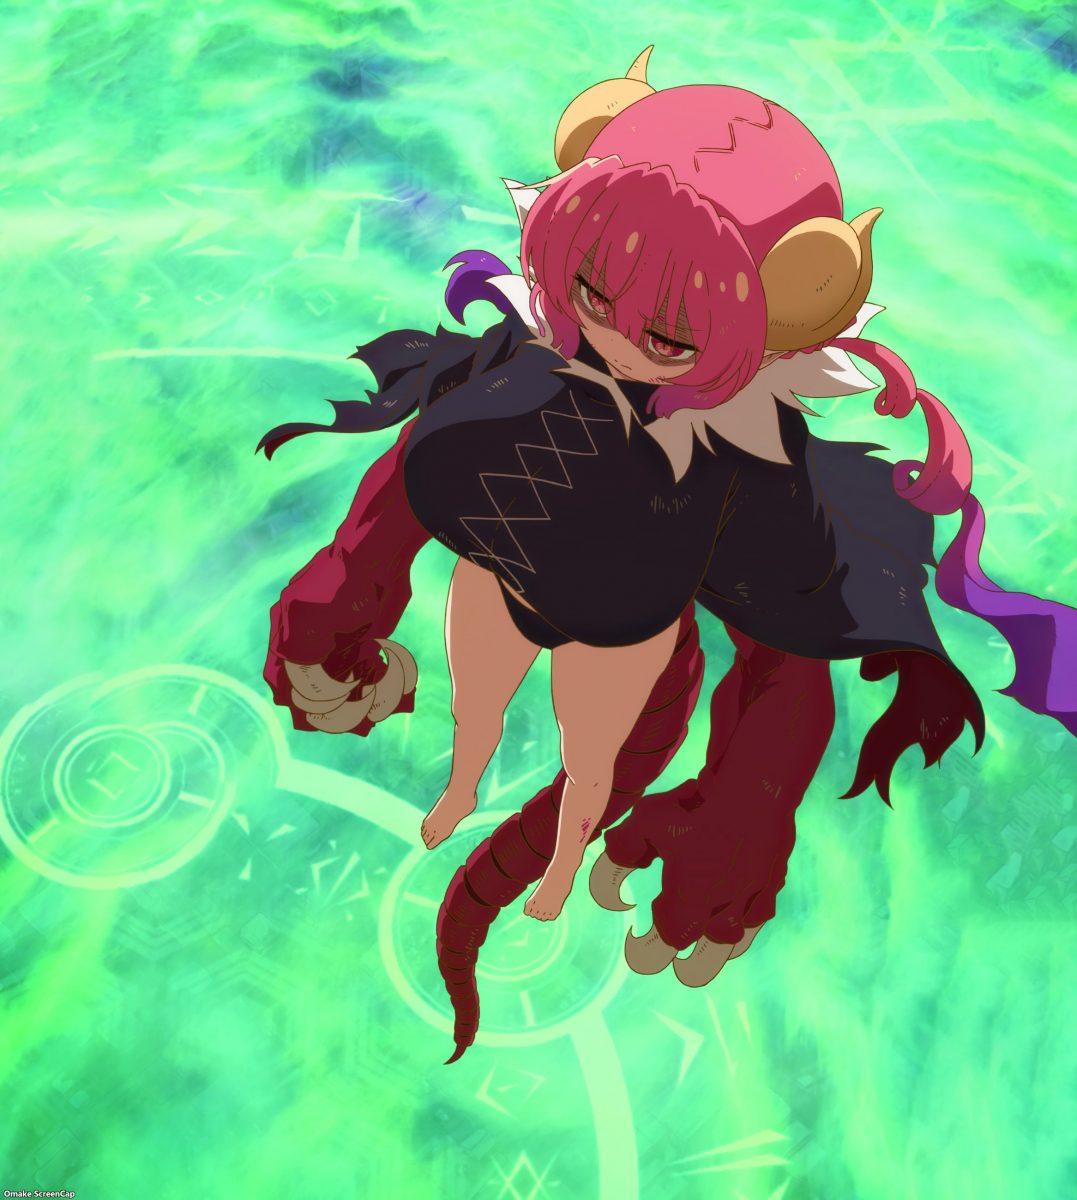 Miss Kobayashi's Dragon Maid S Episode 1 Ilulu Floats Above Barrier